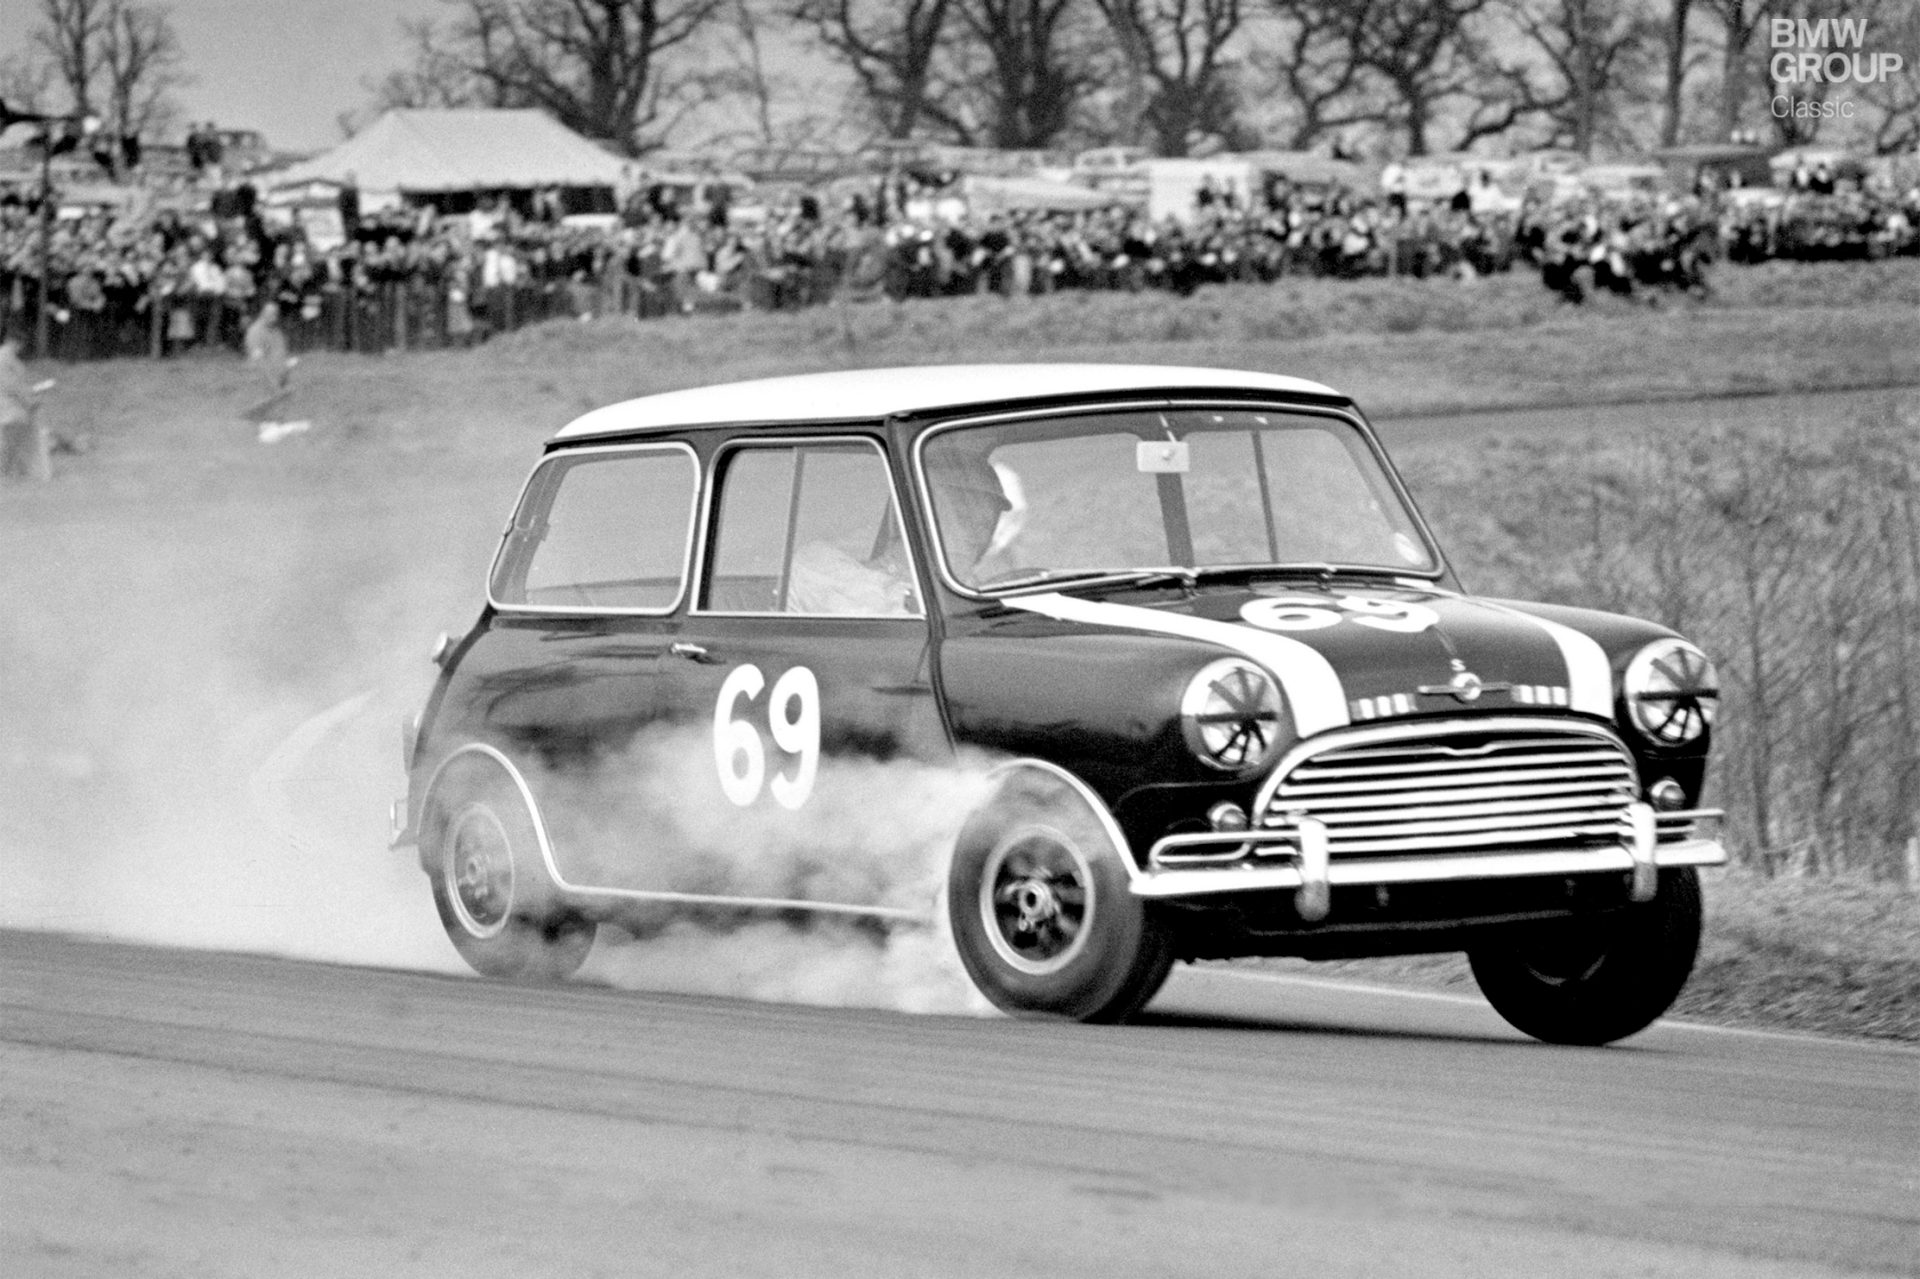 1965 touring car
Oulton park
world copyright: LAT photographic